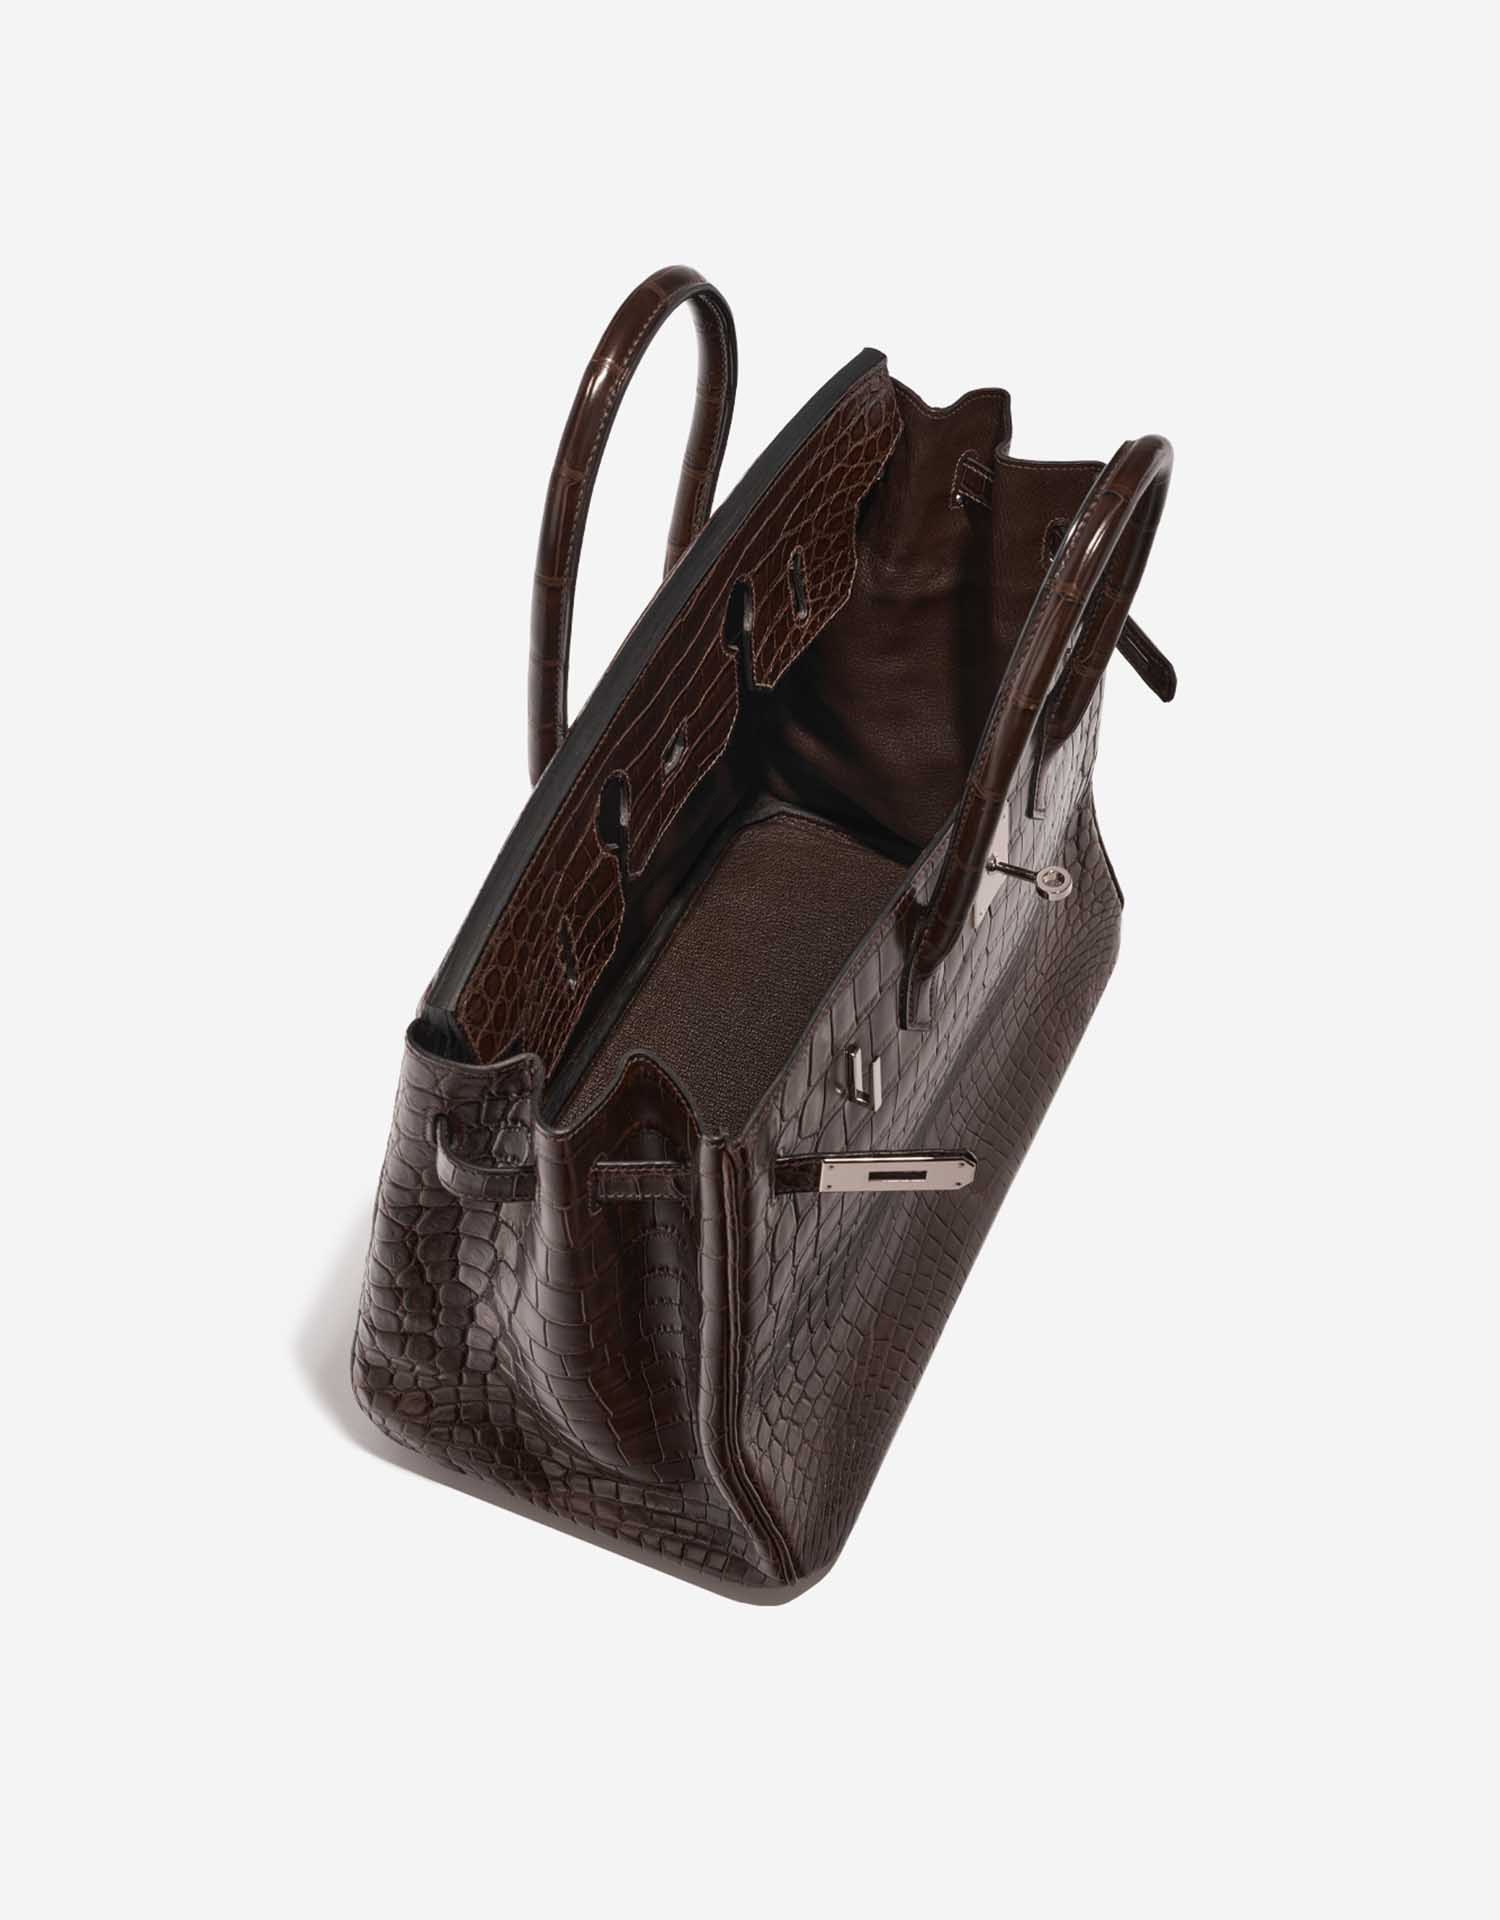 Pre-owned Hermès bag Birkin 35 Crocodile Niloticus Marron Brown Inside | Sell your designer bag on Saclab.com